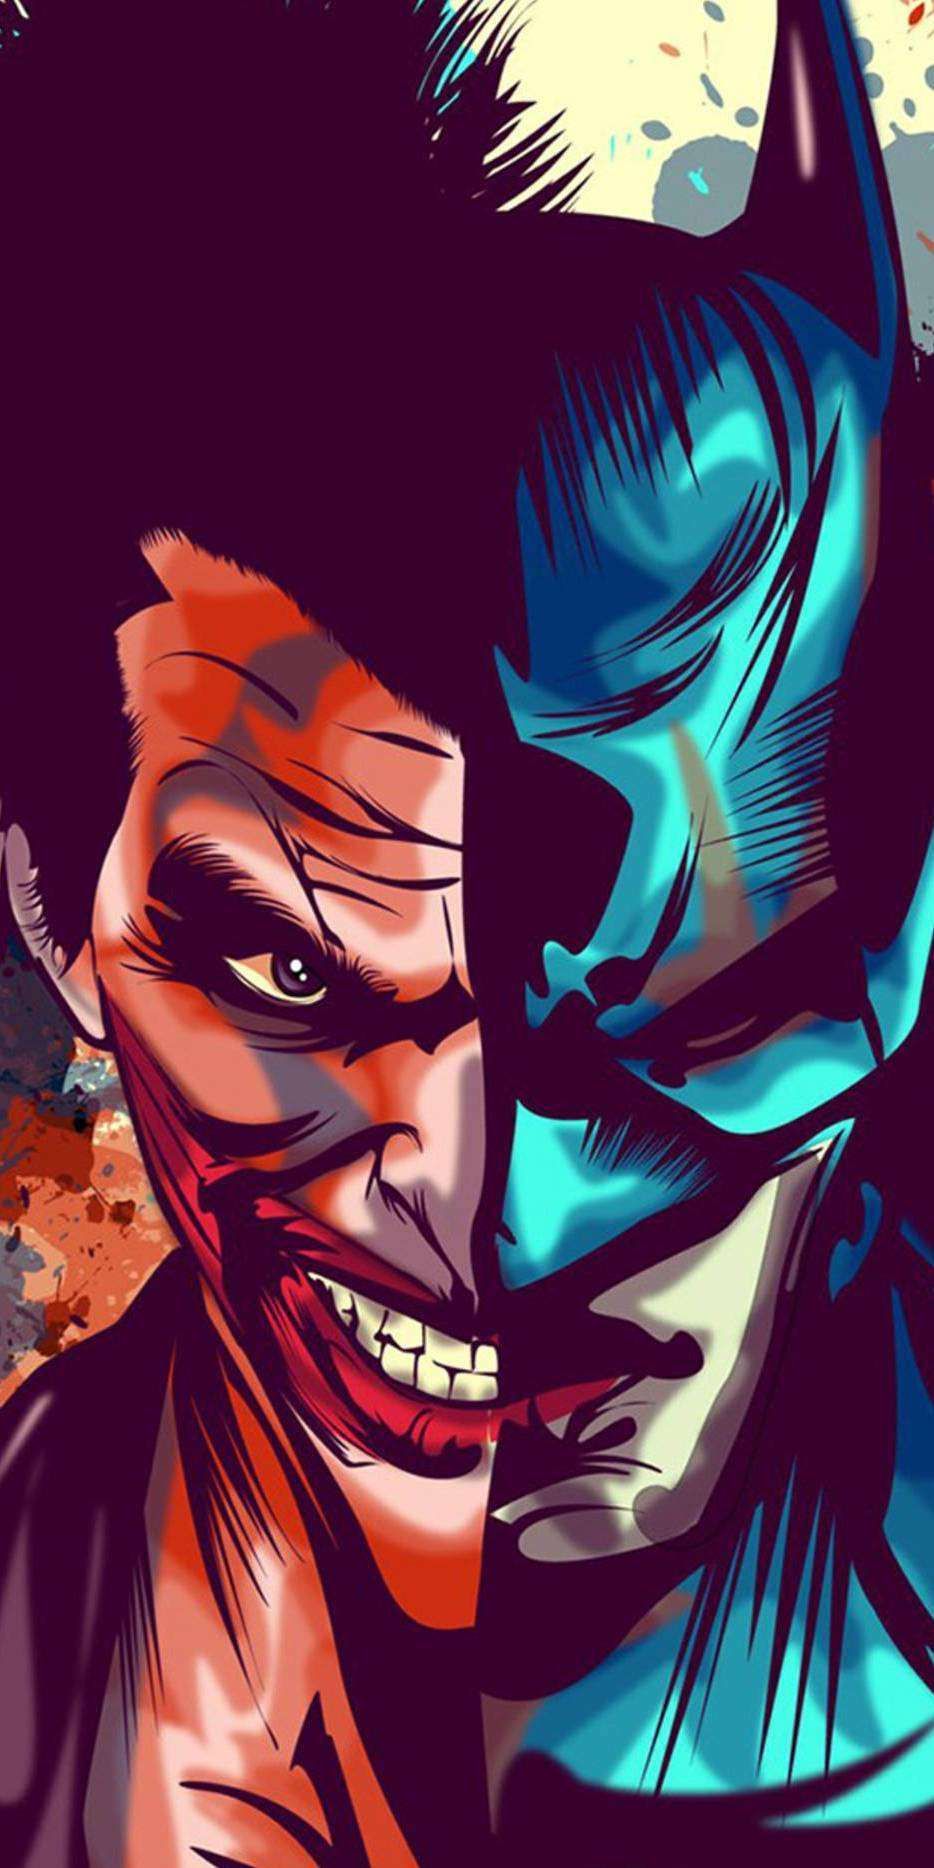 Joker and Batman Faces iPhone Wallpaper. Batman wallpaper, Joker wallpaper, Batman artwork